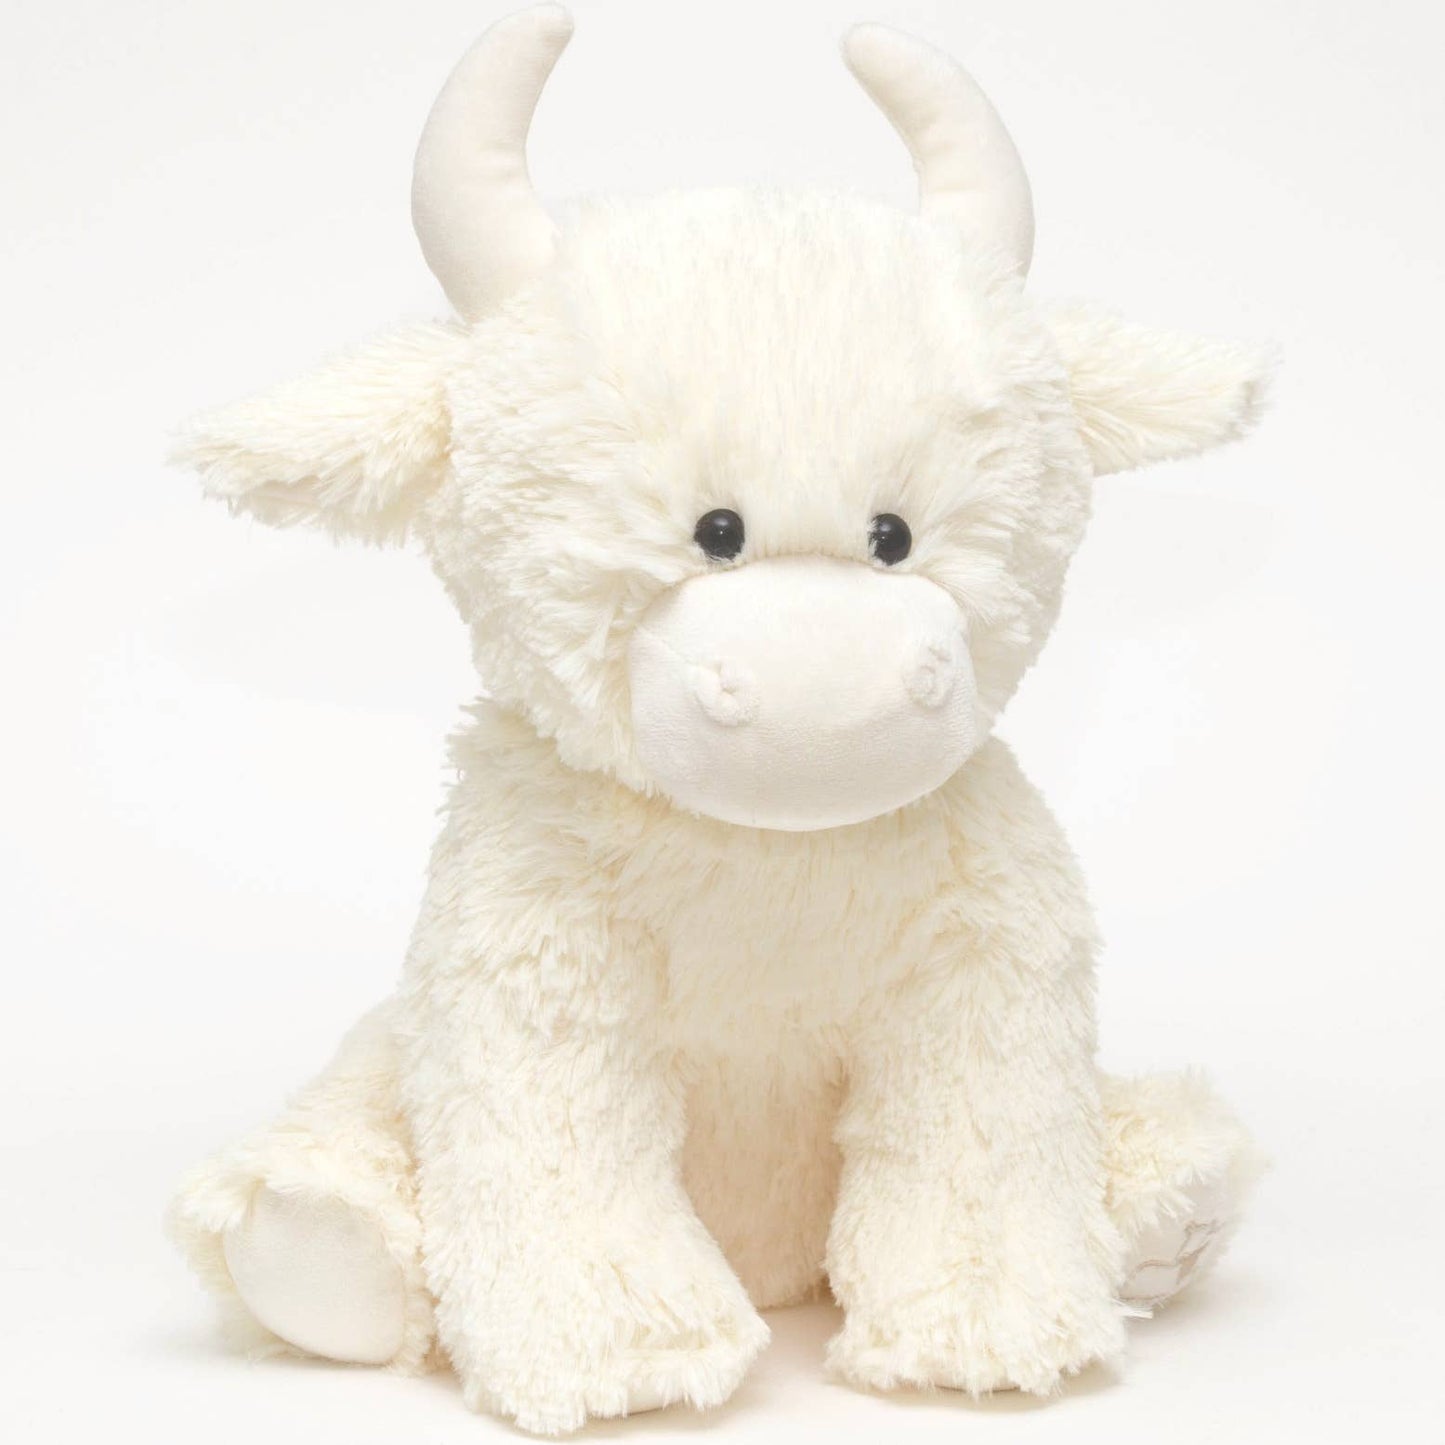 Stuffed Animals Scottish Highland Cow Super Soft Toy - Large Cream - 12 inch JO-MRT80254C-30CM